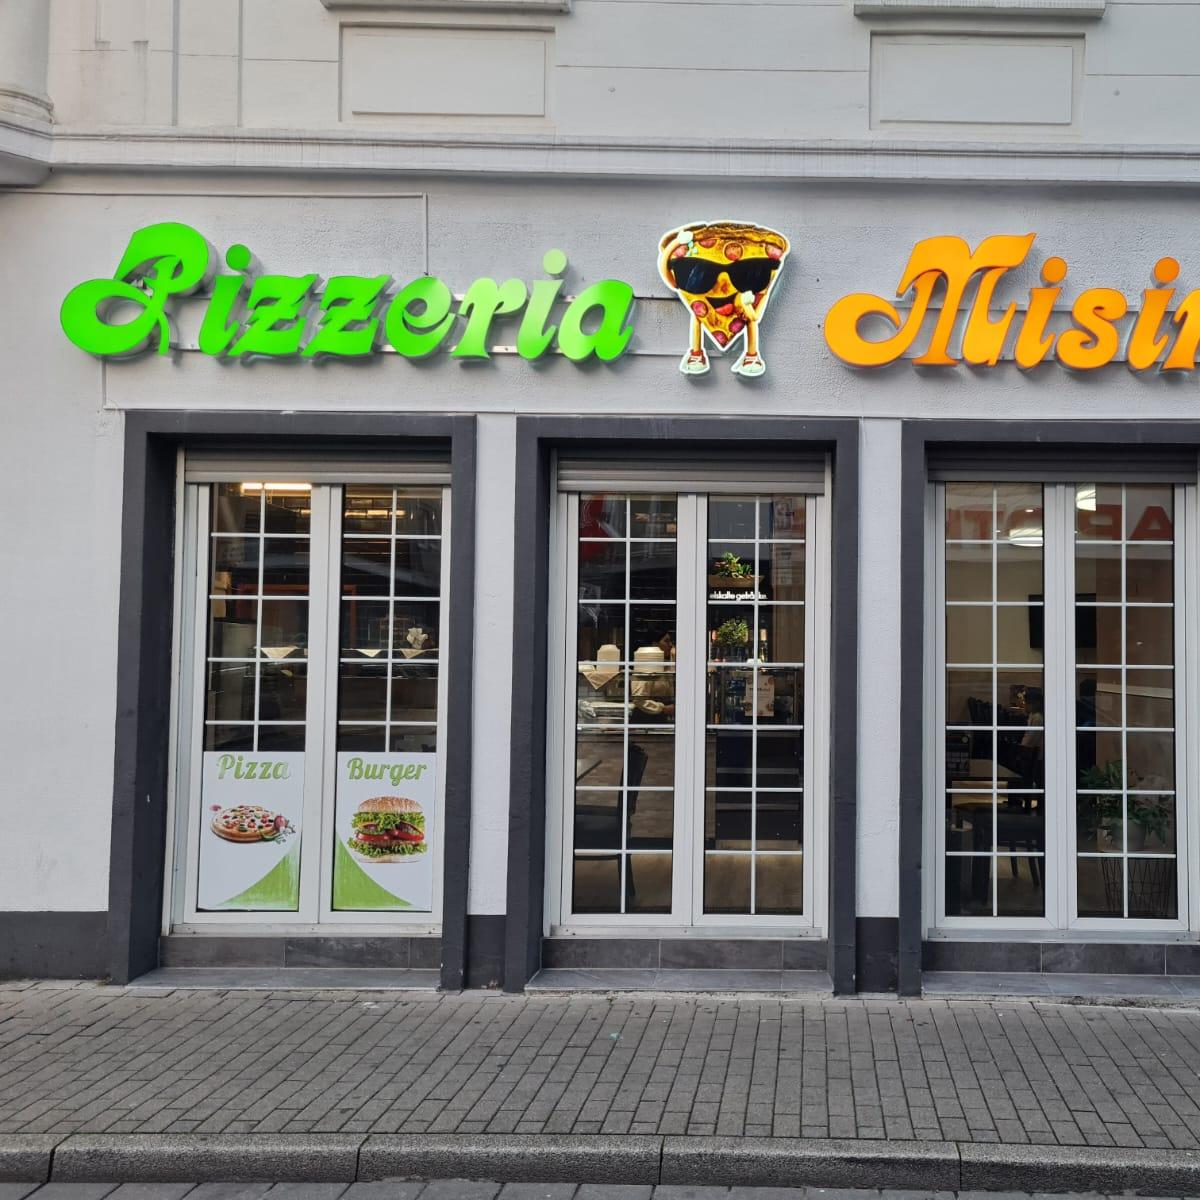 Restaurant "Pizzeria Misini" in Gelsenkirchen